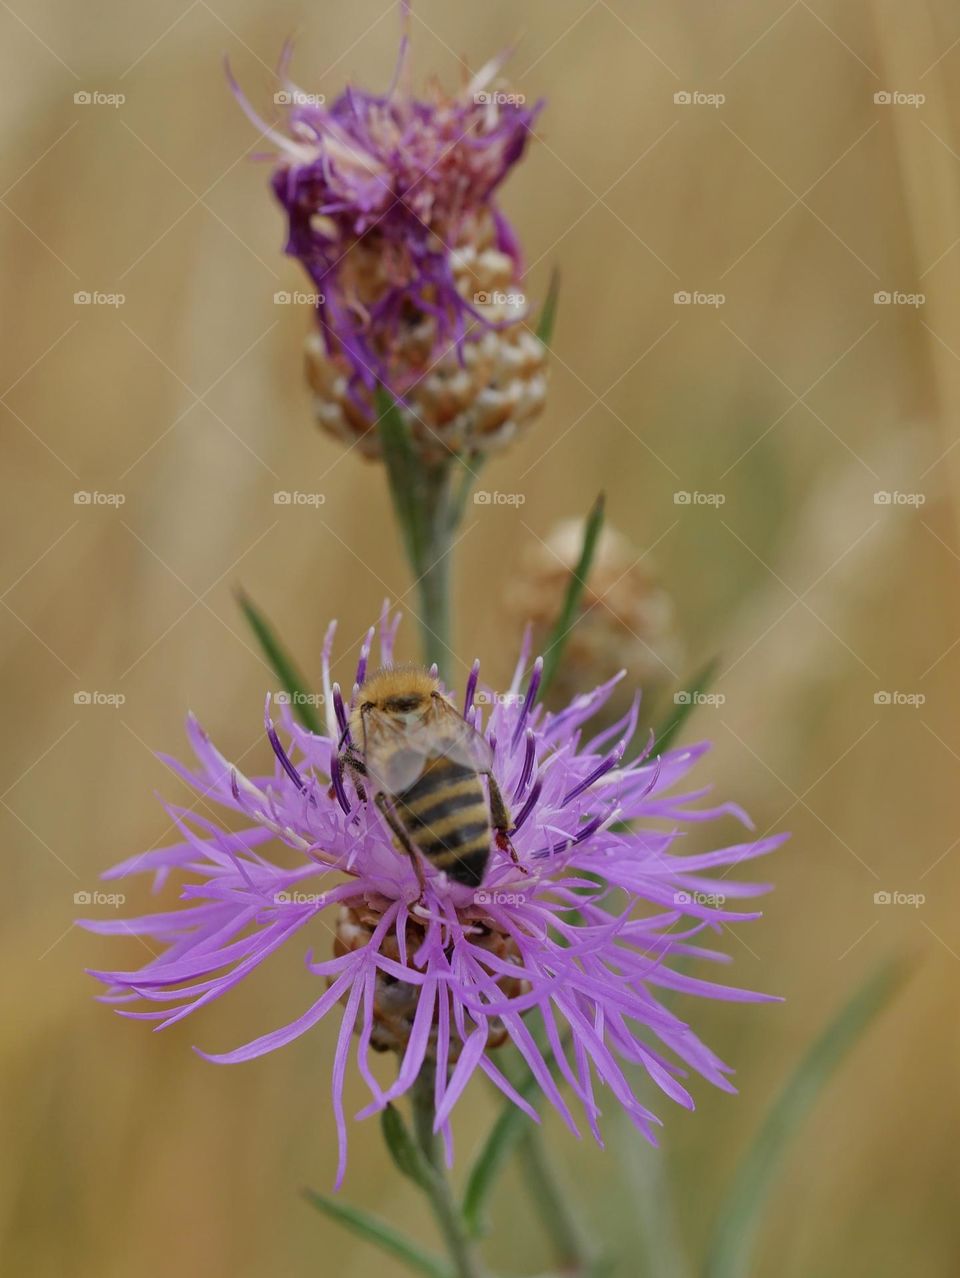 Wildbee pollinating knapweed flower